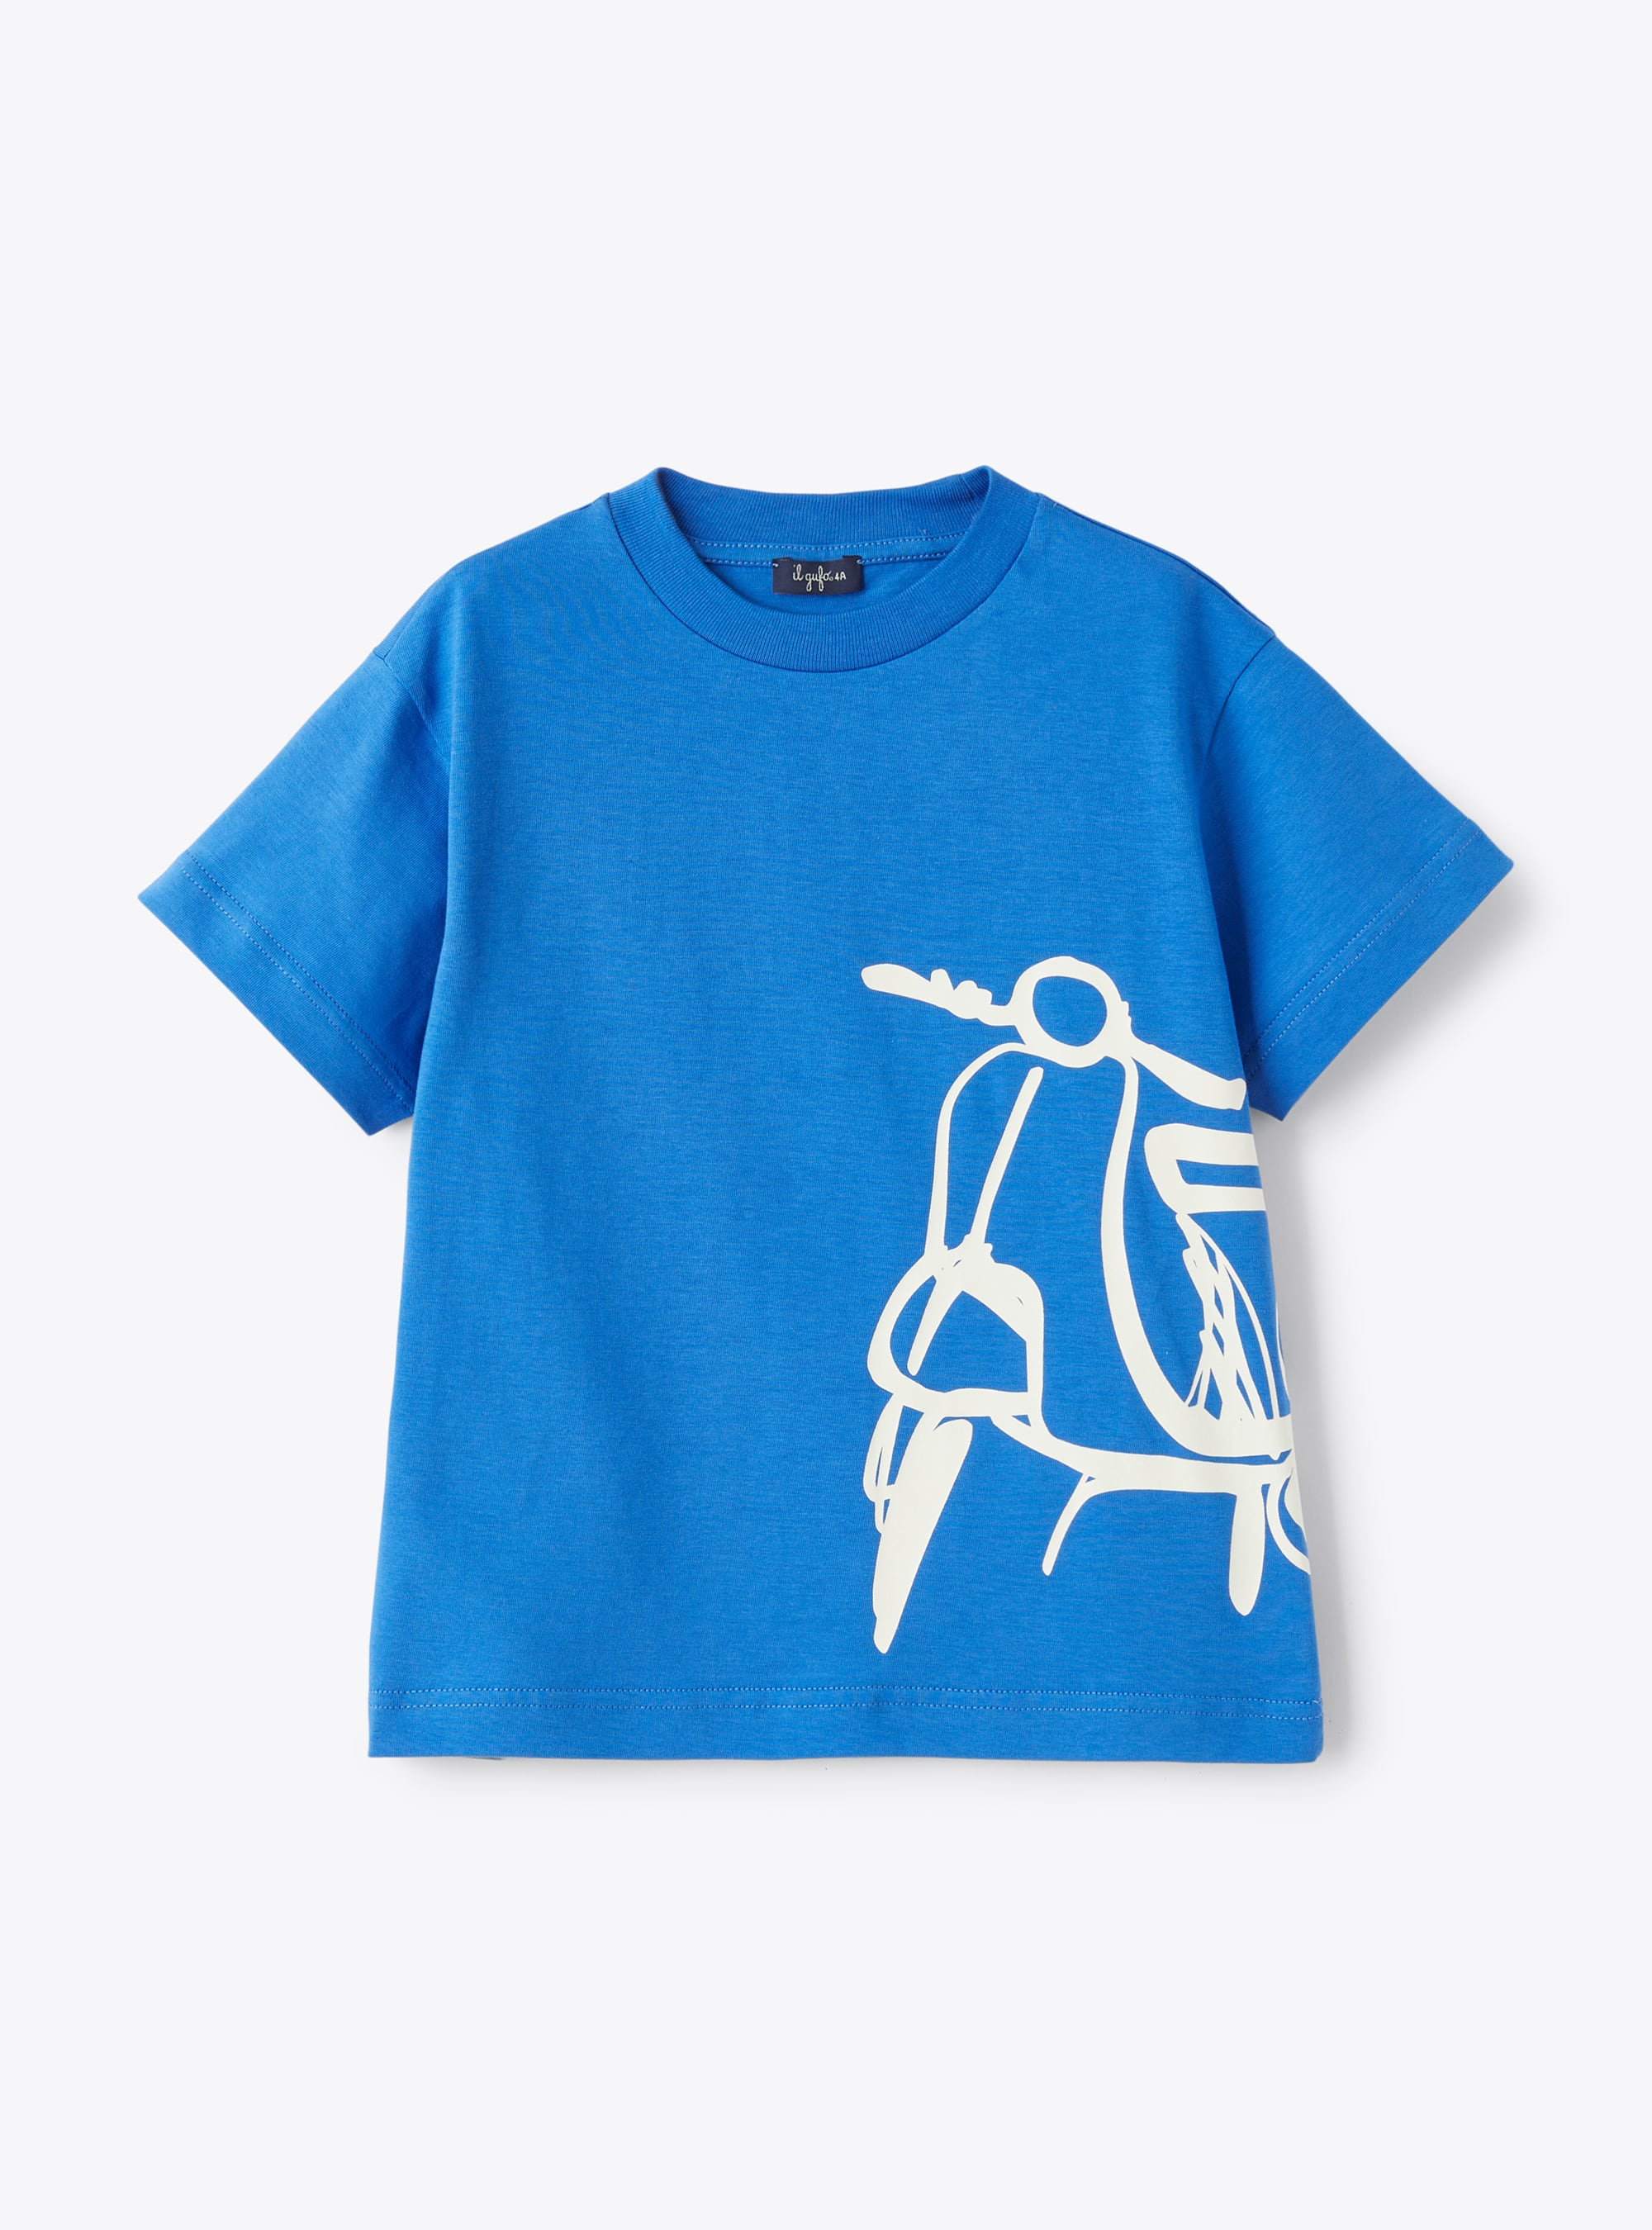 Kobaltblaues T-Shirt mit aufgedruckter Vespa  - T-shirts - Il Gufo